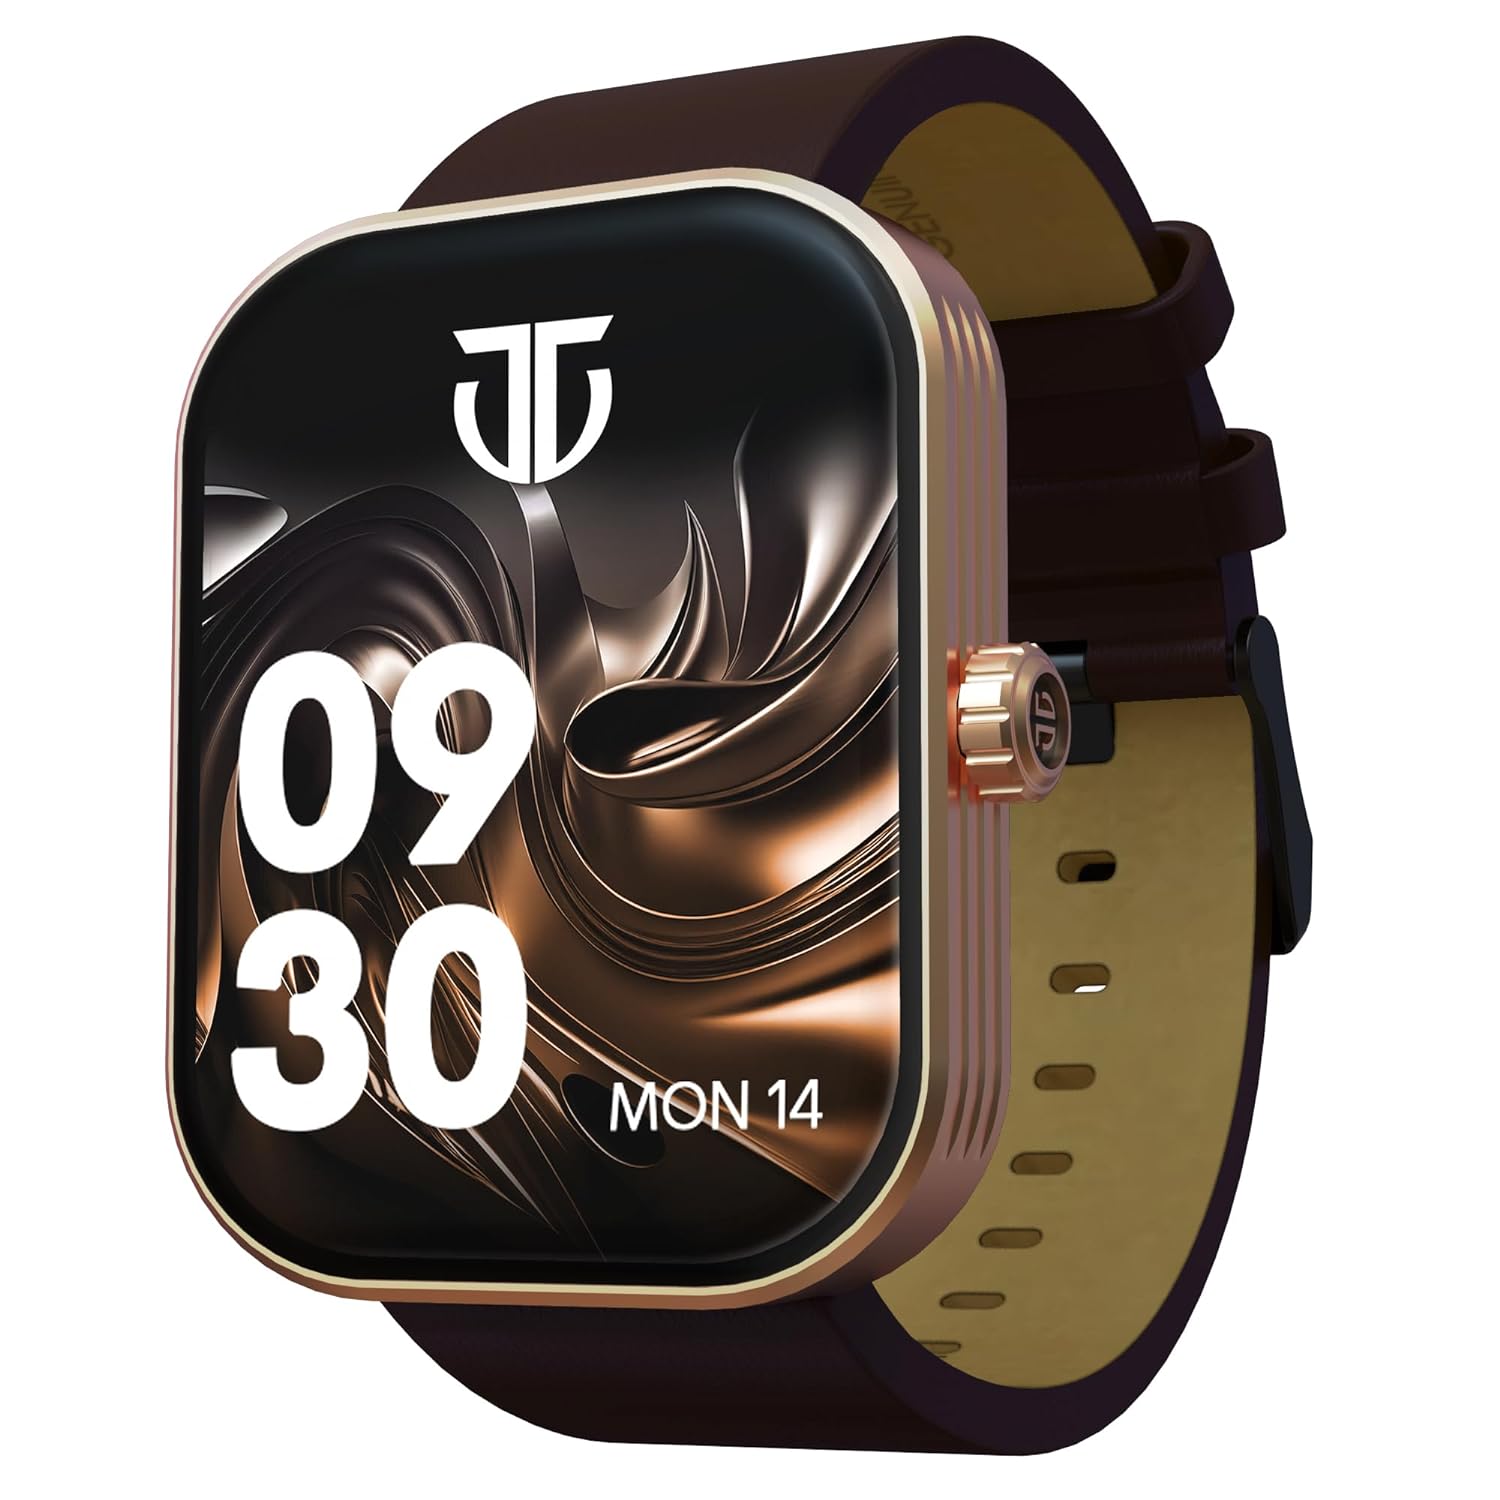 Titan Mirage Premium Fashion Smartwatch